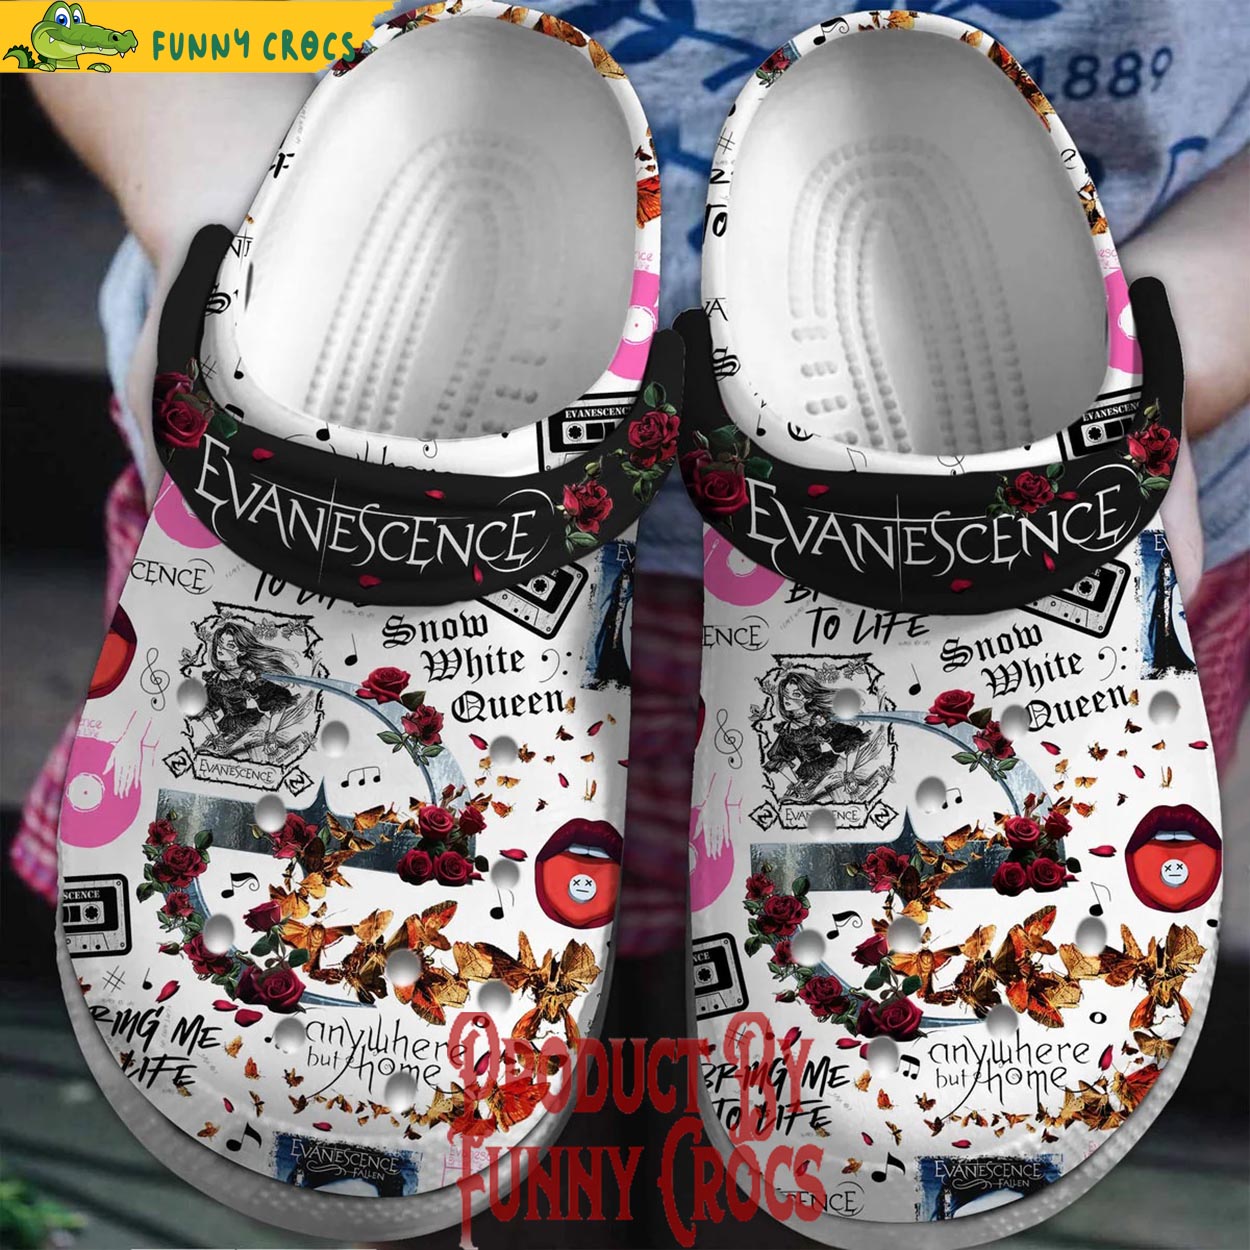 Evanescence Crocs Clogs Shoes